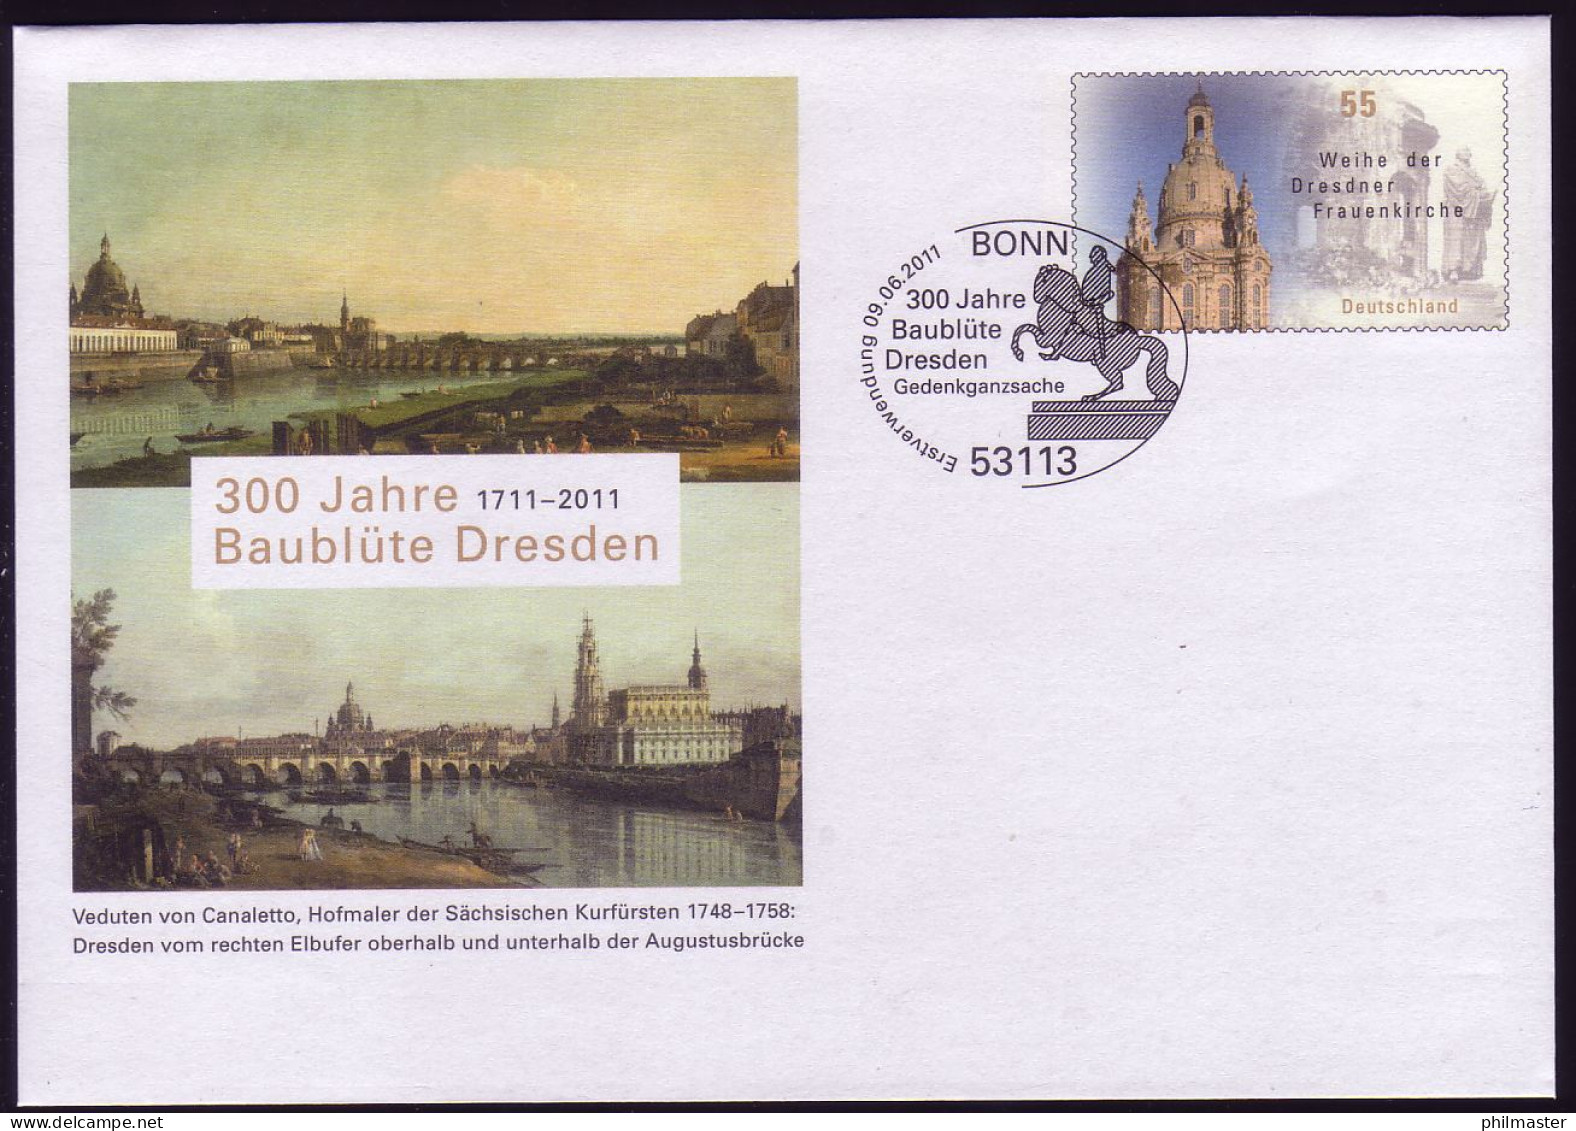 USo 240 300 Jahre Baublüte Dresden 2011, EV-Bonn Bonn 9.6.11 - Covers - Mint